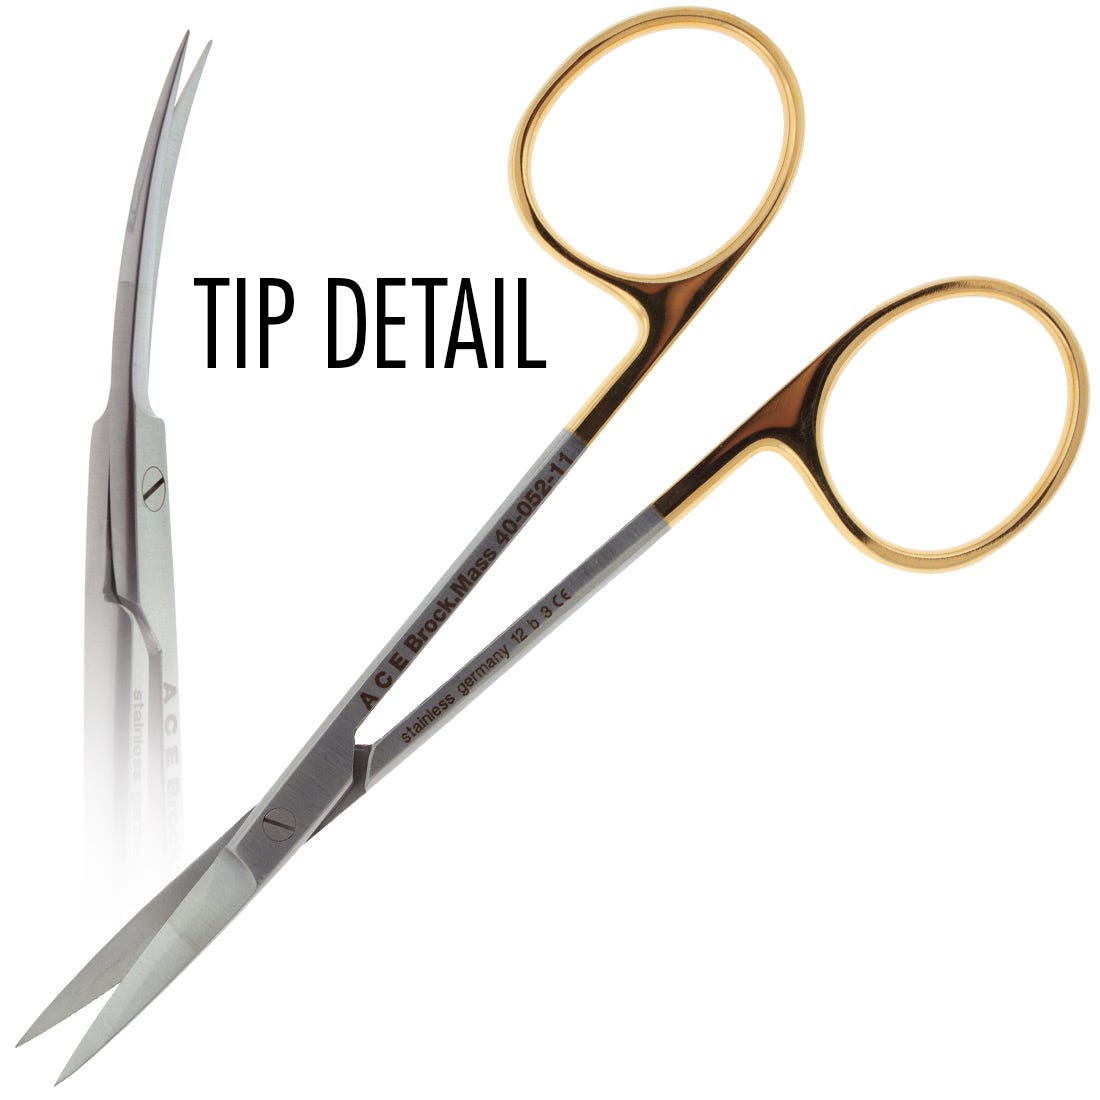 ACE Iris Scissors, curved, tungsten carbide tips